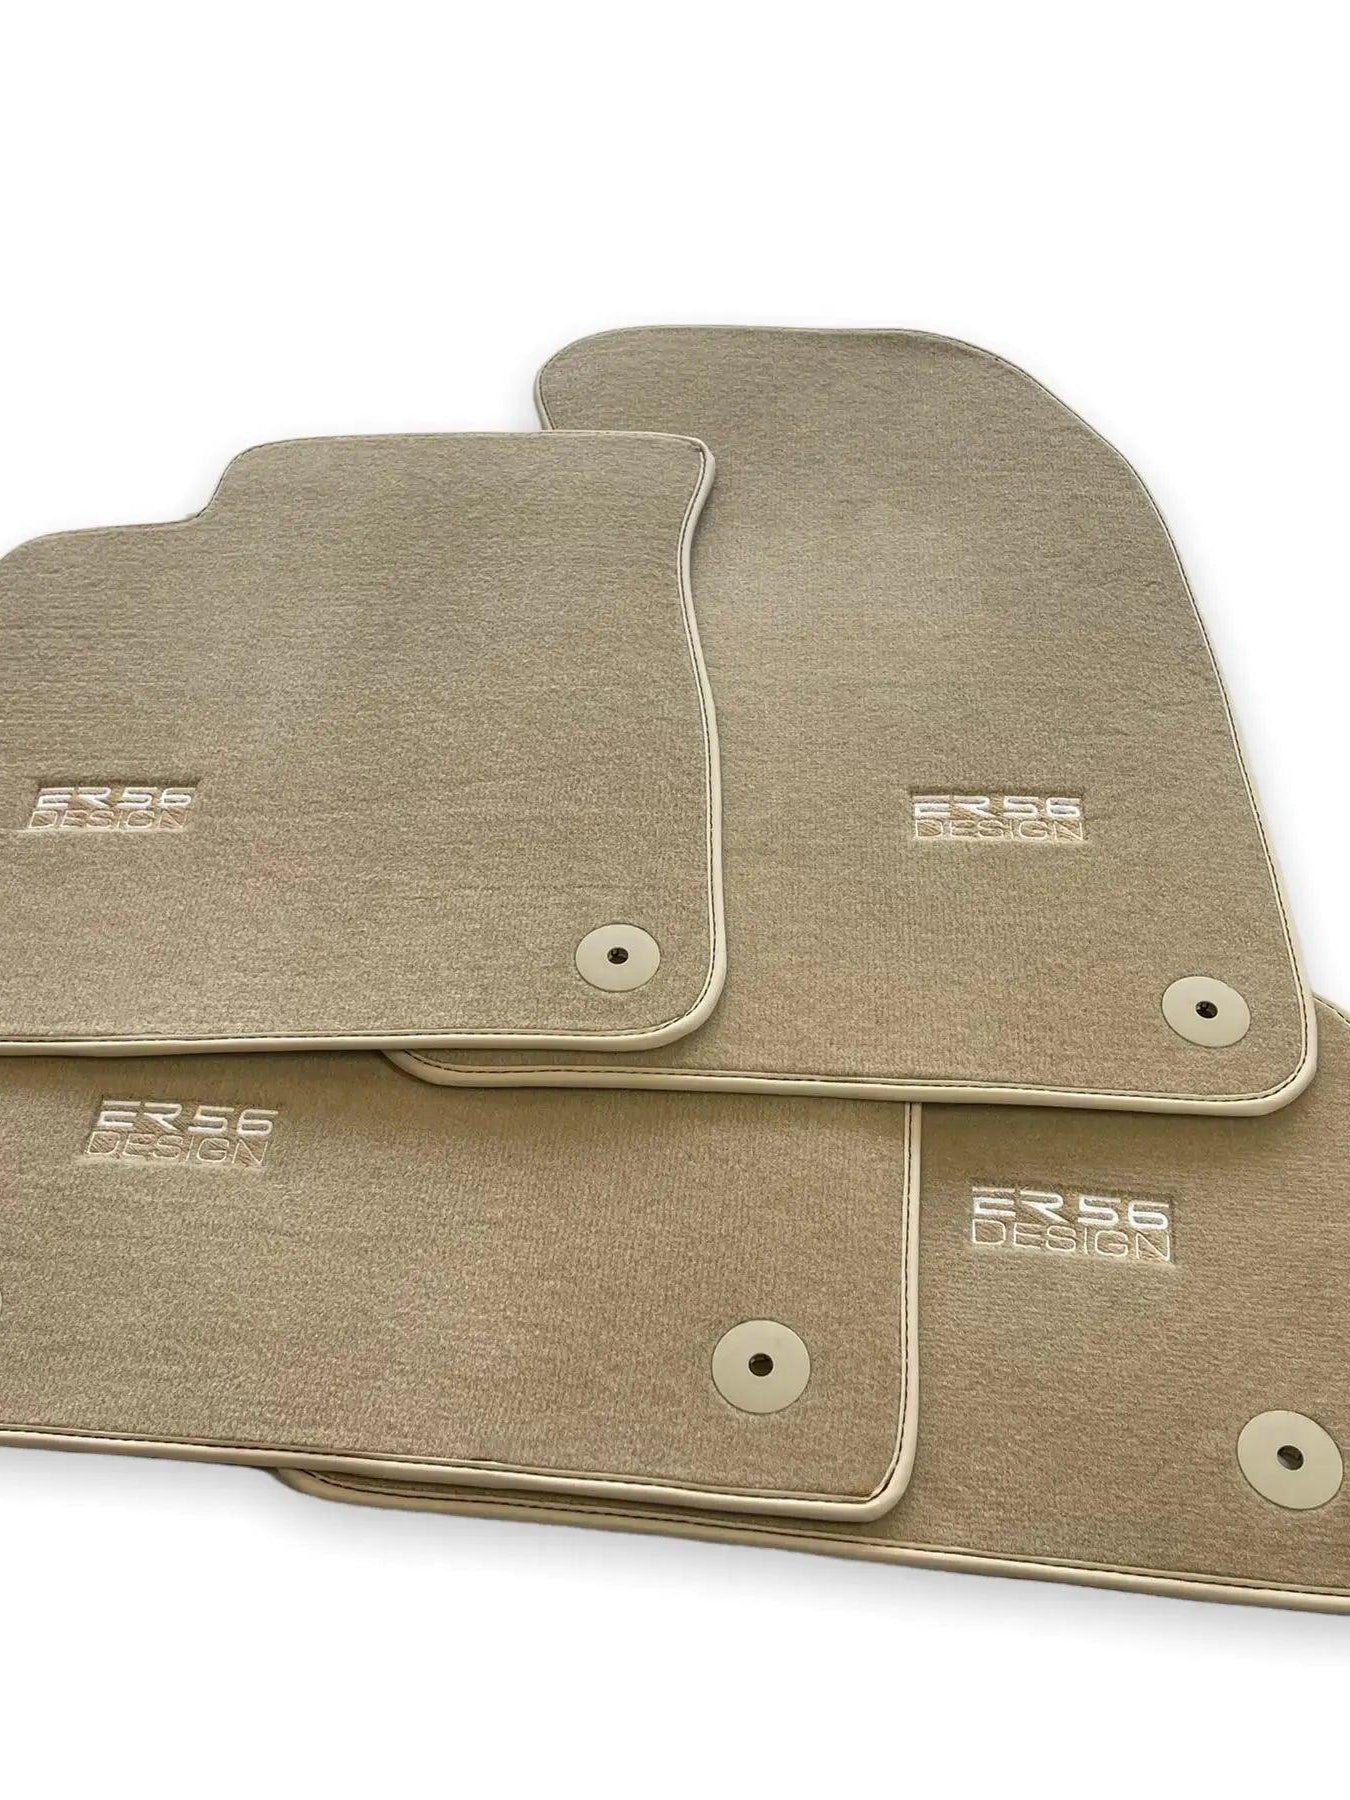 Beige Floor Mats for Audi Q7 4L (2006-2015) | ER56 Design - AutoWin